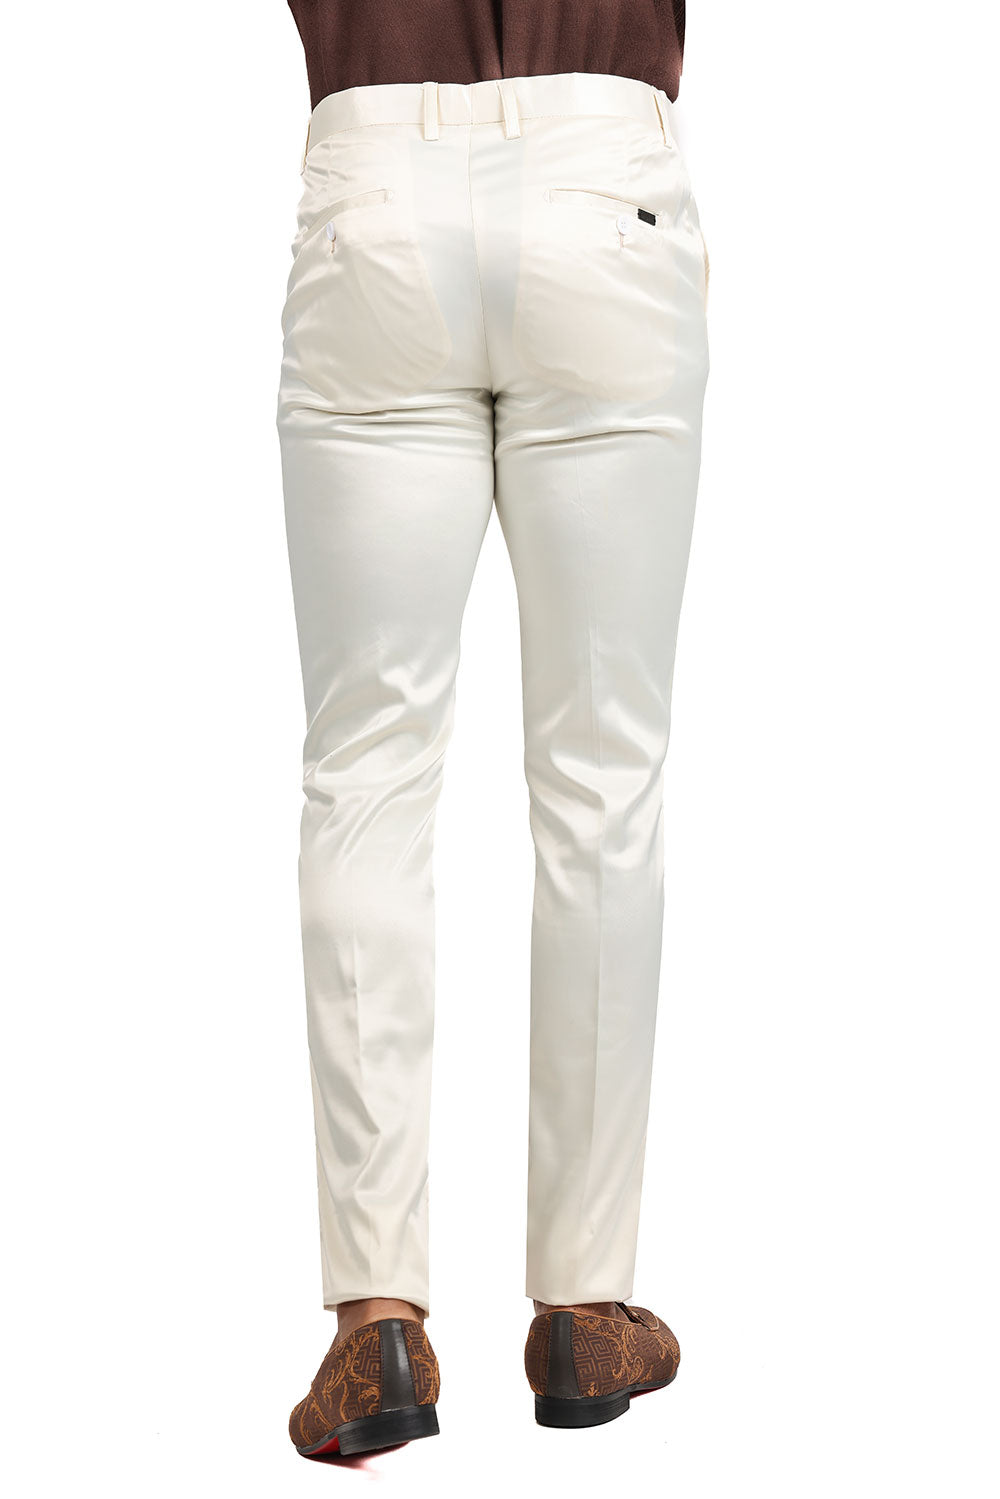 BARABAS Men's Solid Color Shiny Chino Pants VP1010 Cream